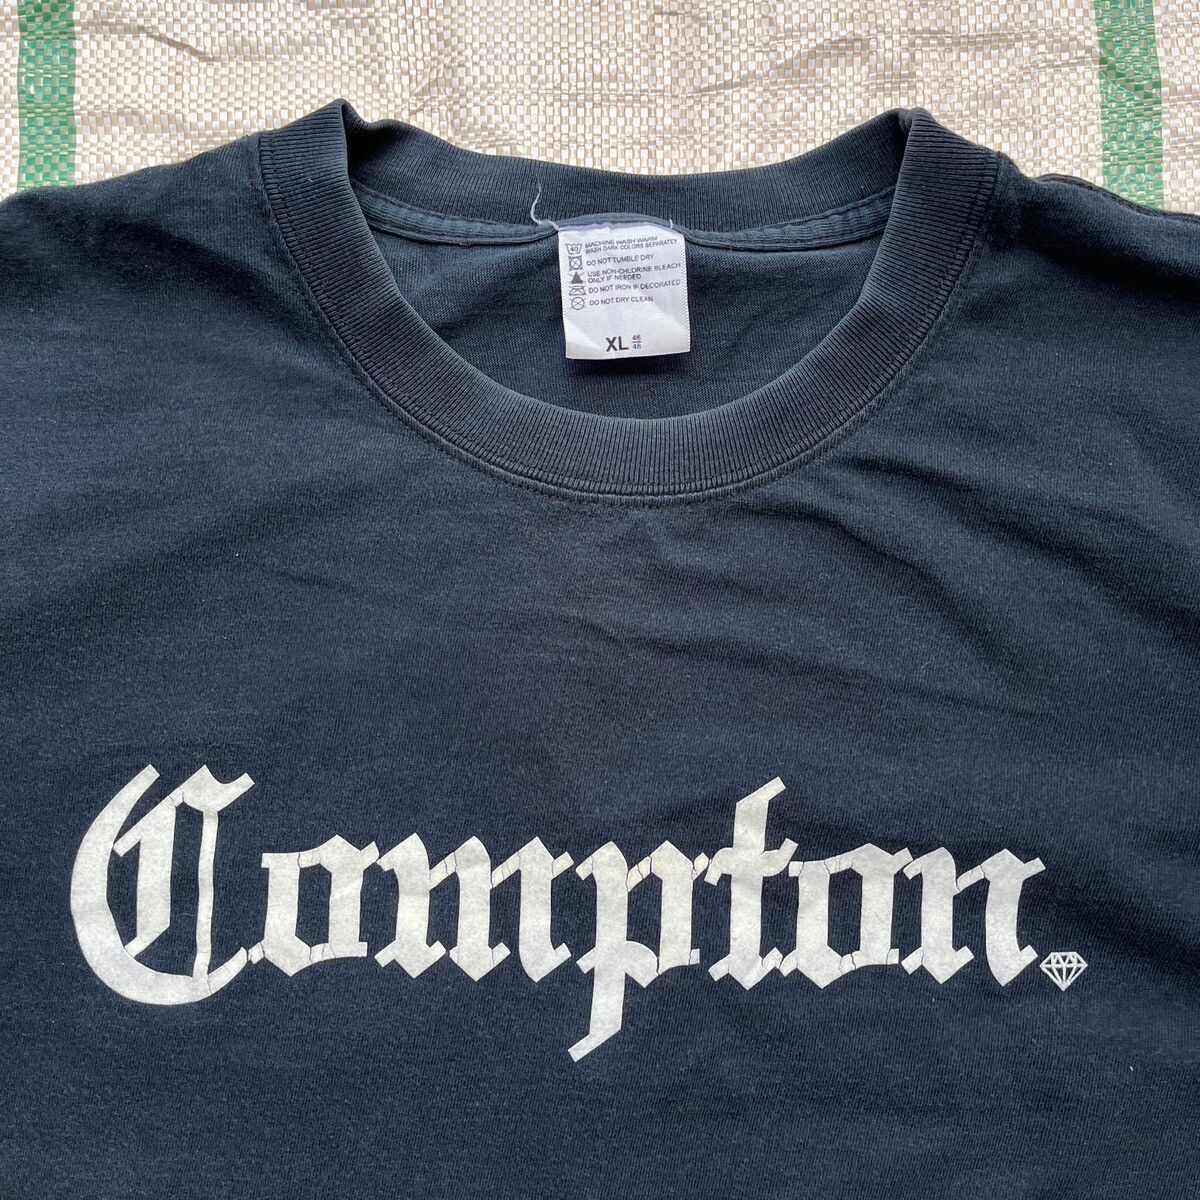 Vintage - Compton Street Fashio Streetwear Black Tees - 5